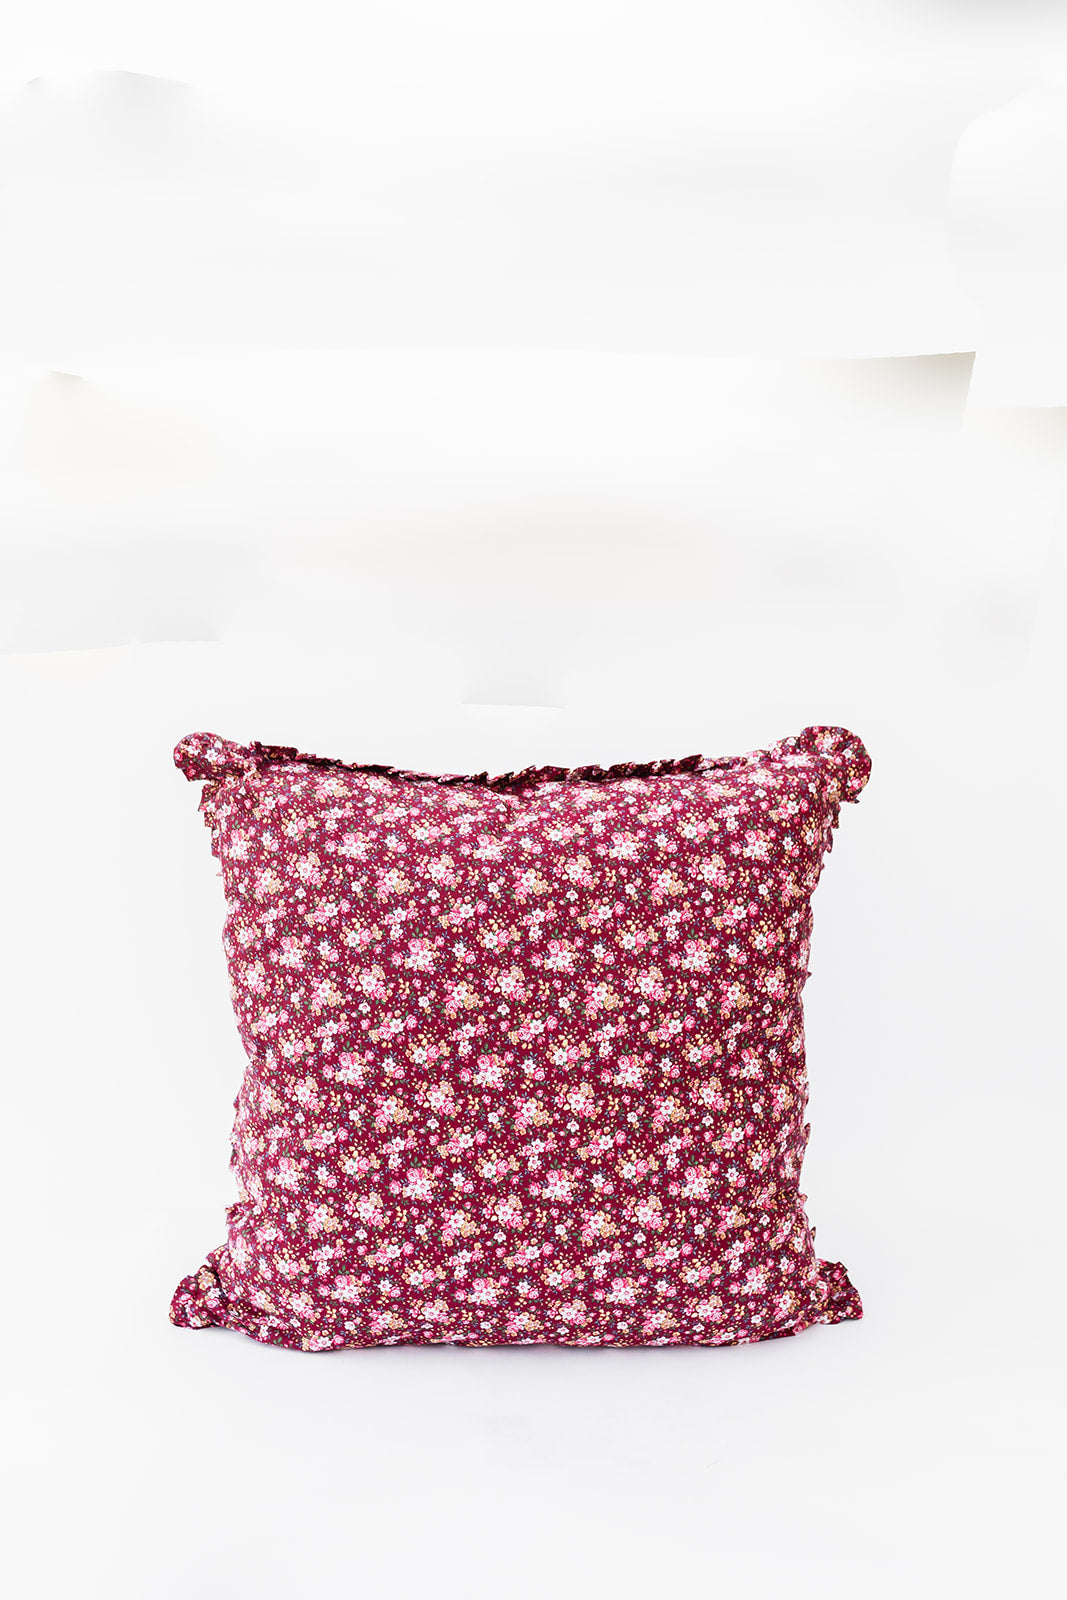 The Handmade Ruffled Pillow Cover